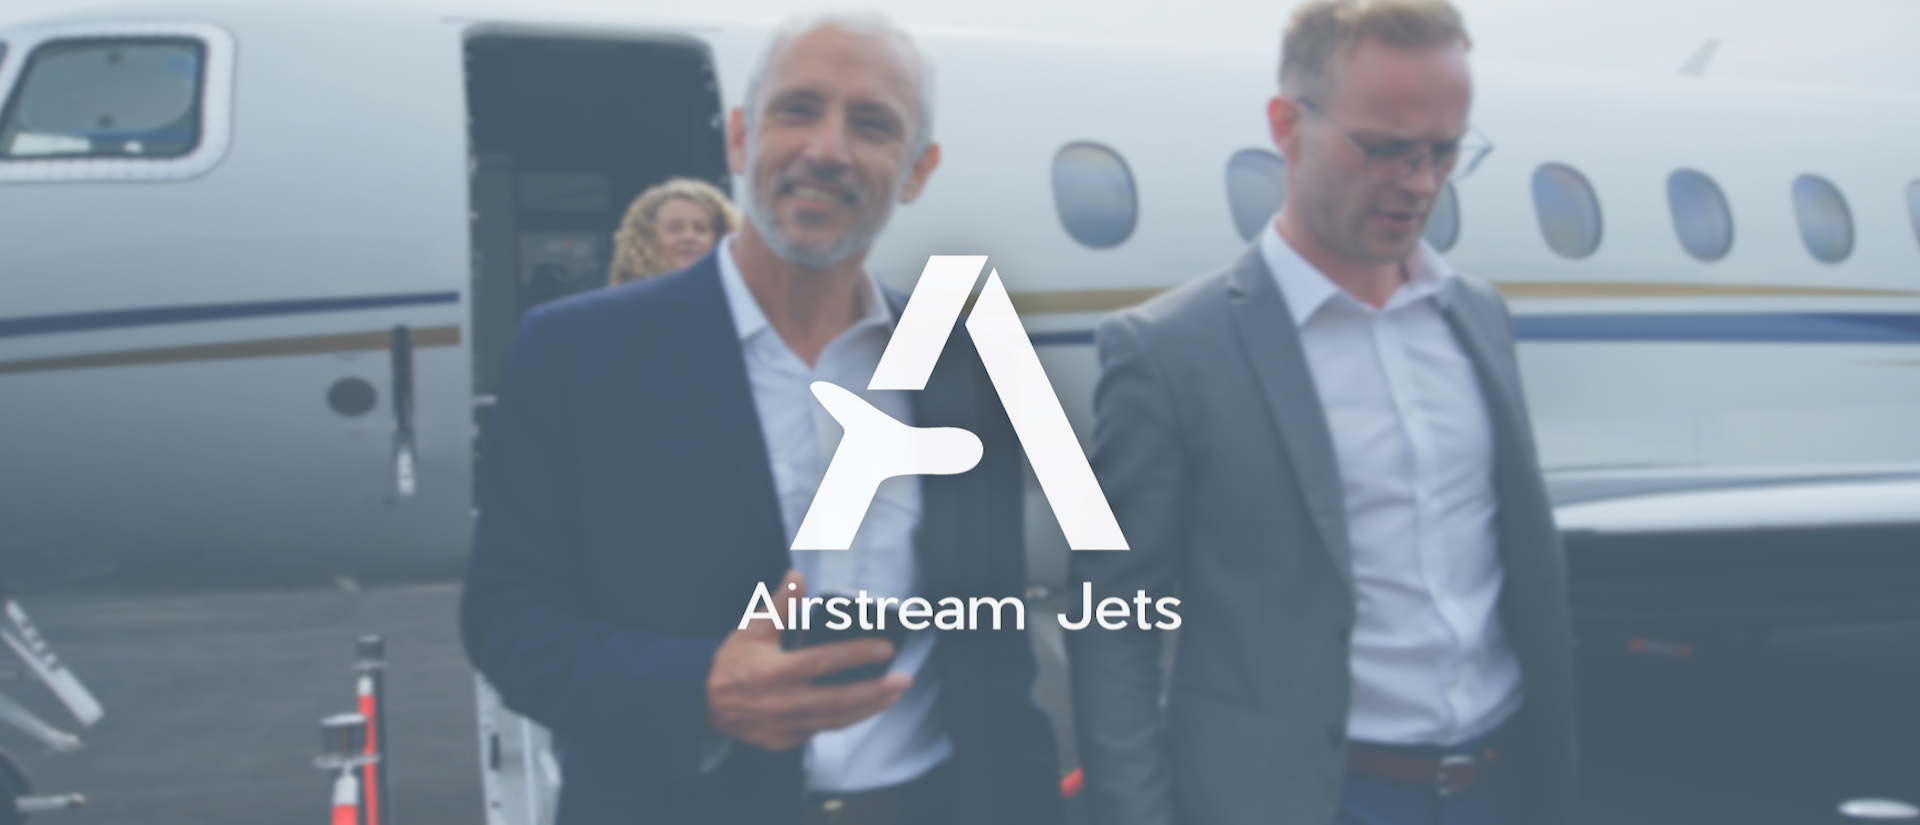 Airstream Jets homepage video